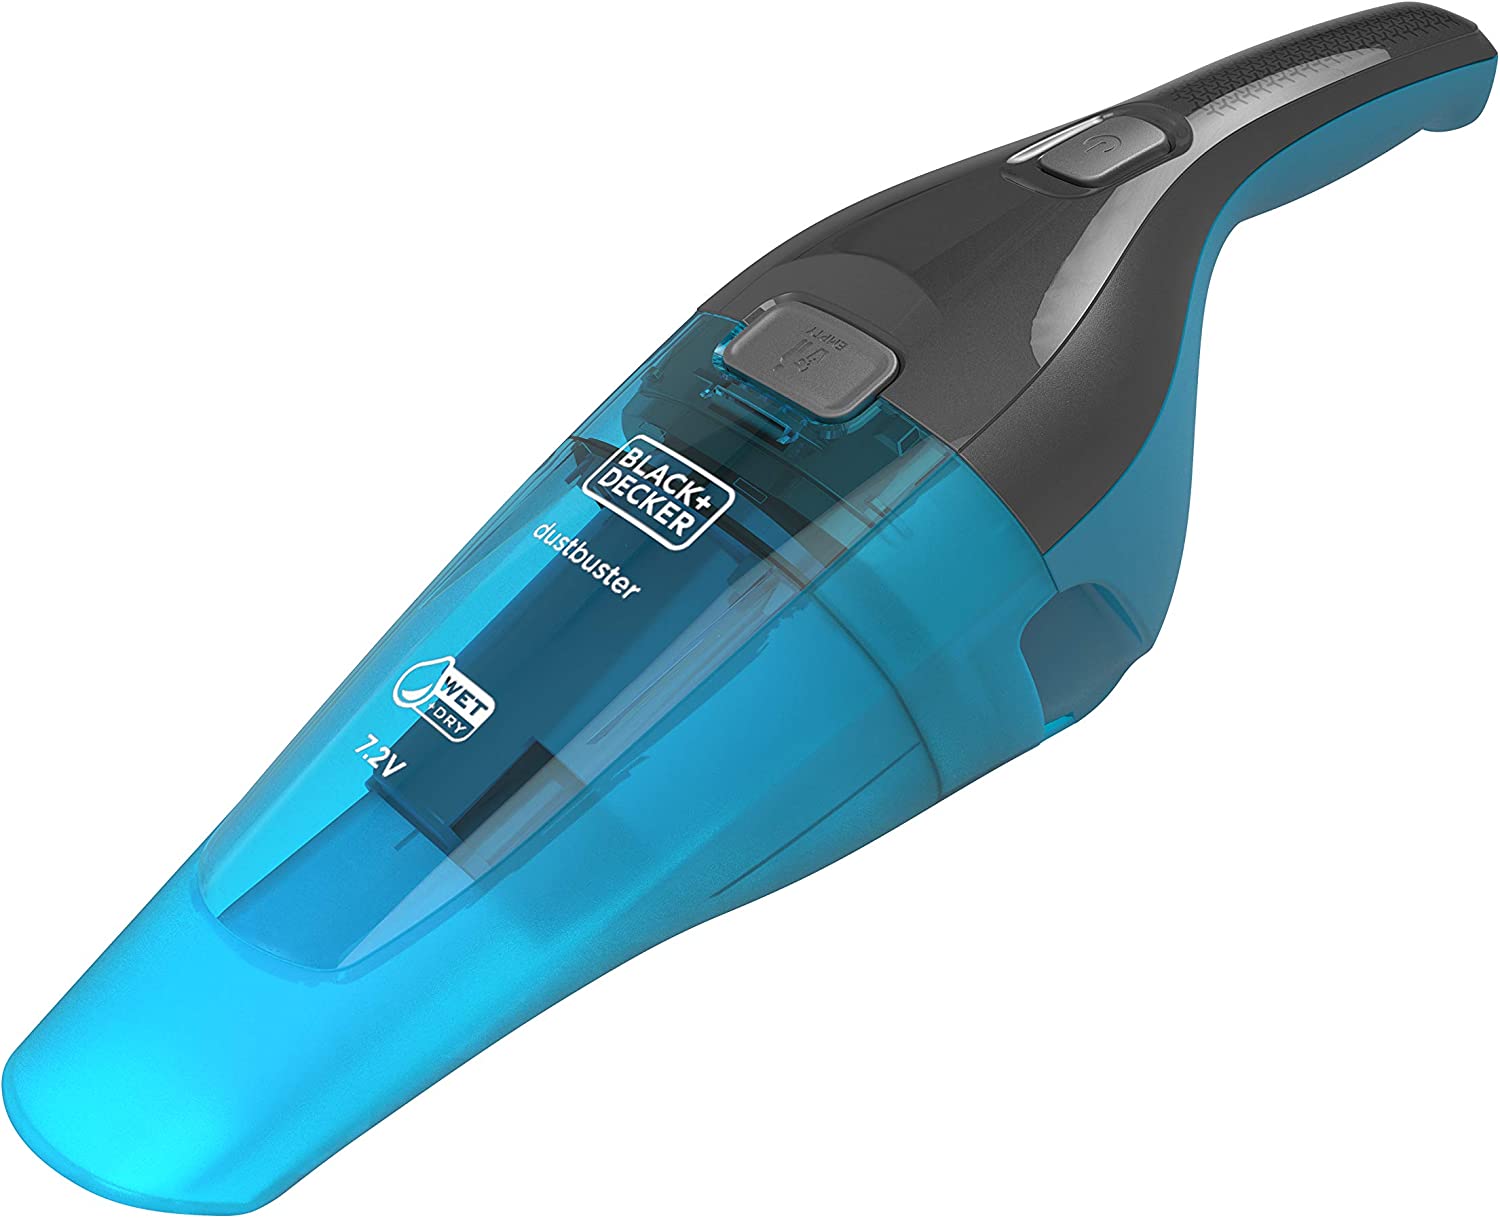 Black+Decker Cordless Dustbuster Handheld Wet & Dry Vacuum Cleaner مكنسة كهربائية لاسلكية للتنظيف الجاف والرطب